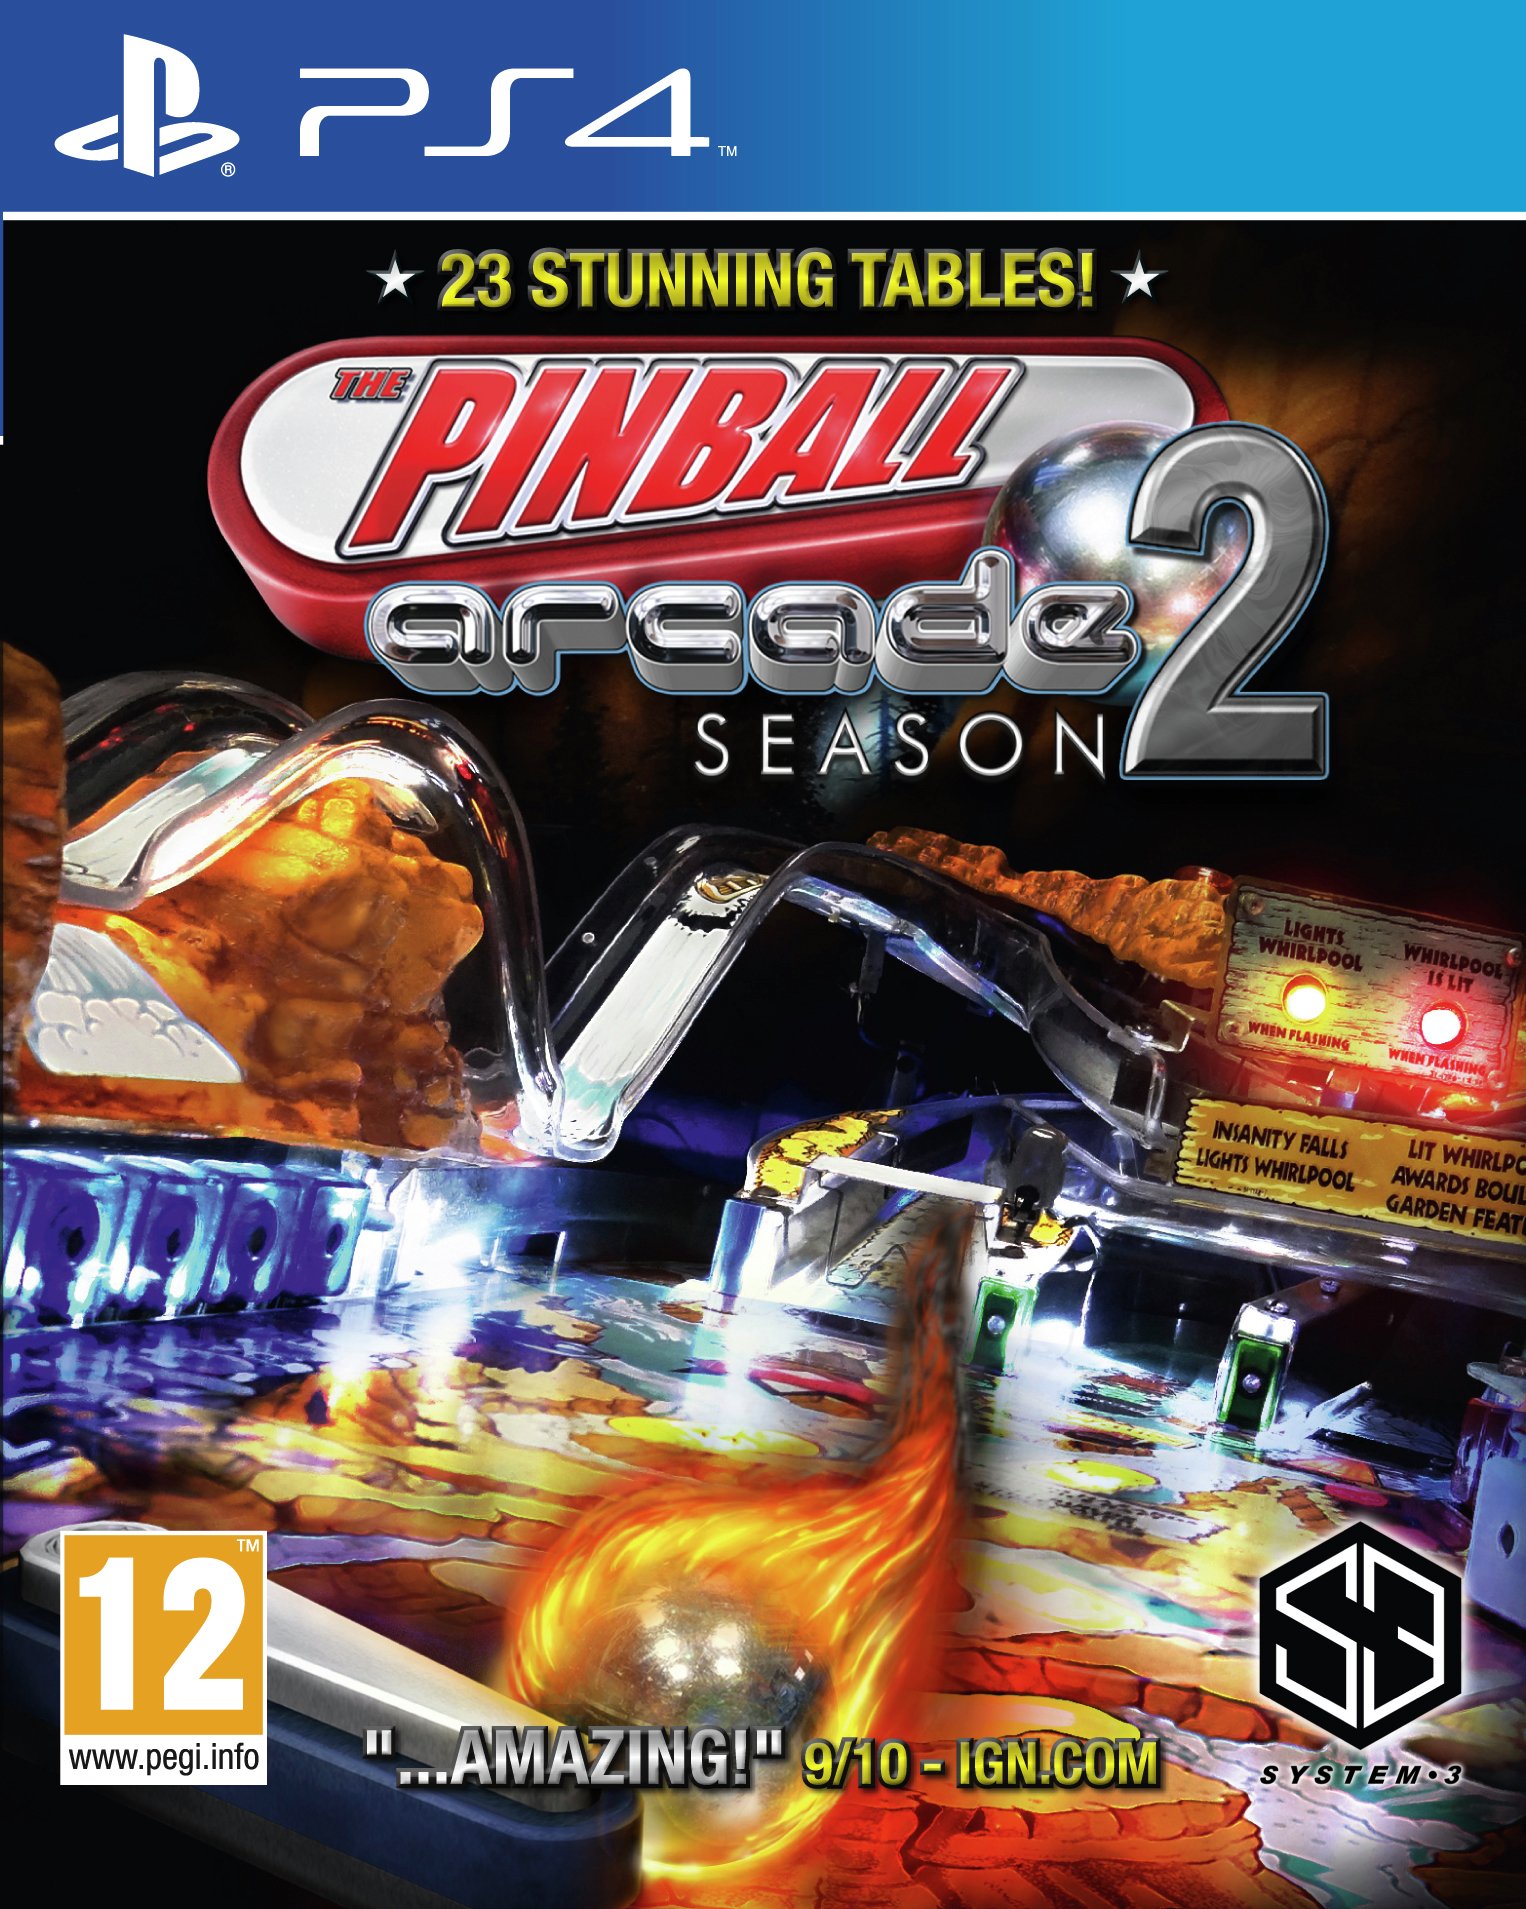 Pinball Arcade Season 2 PS4 Game.